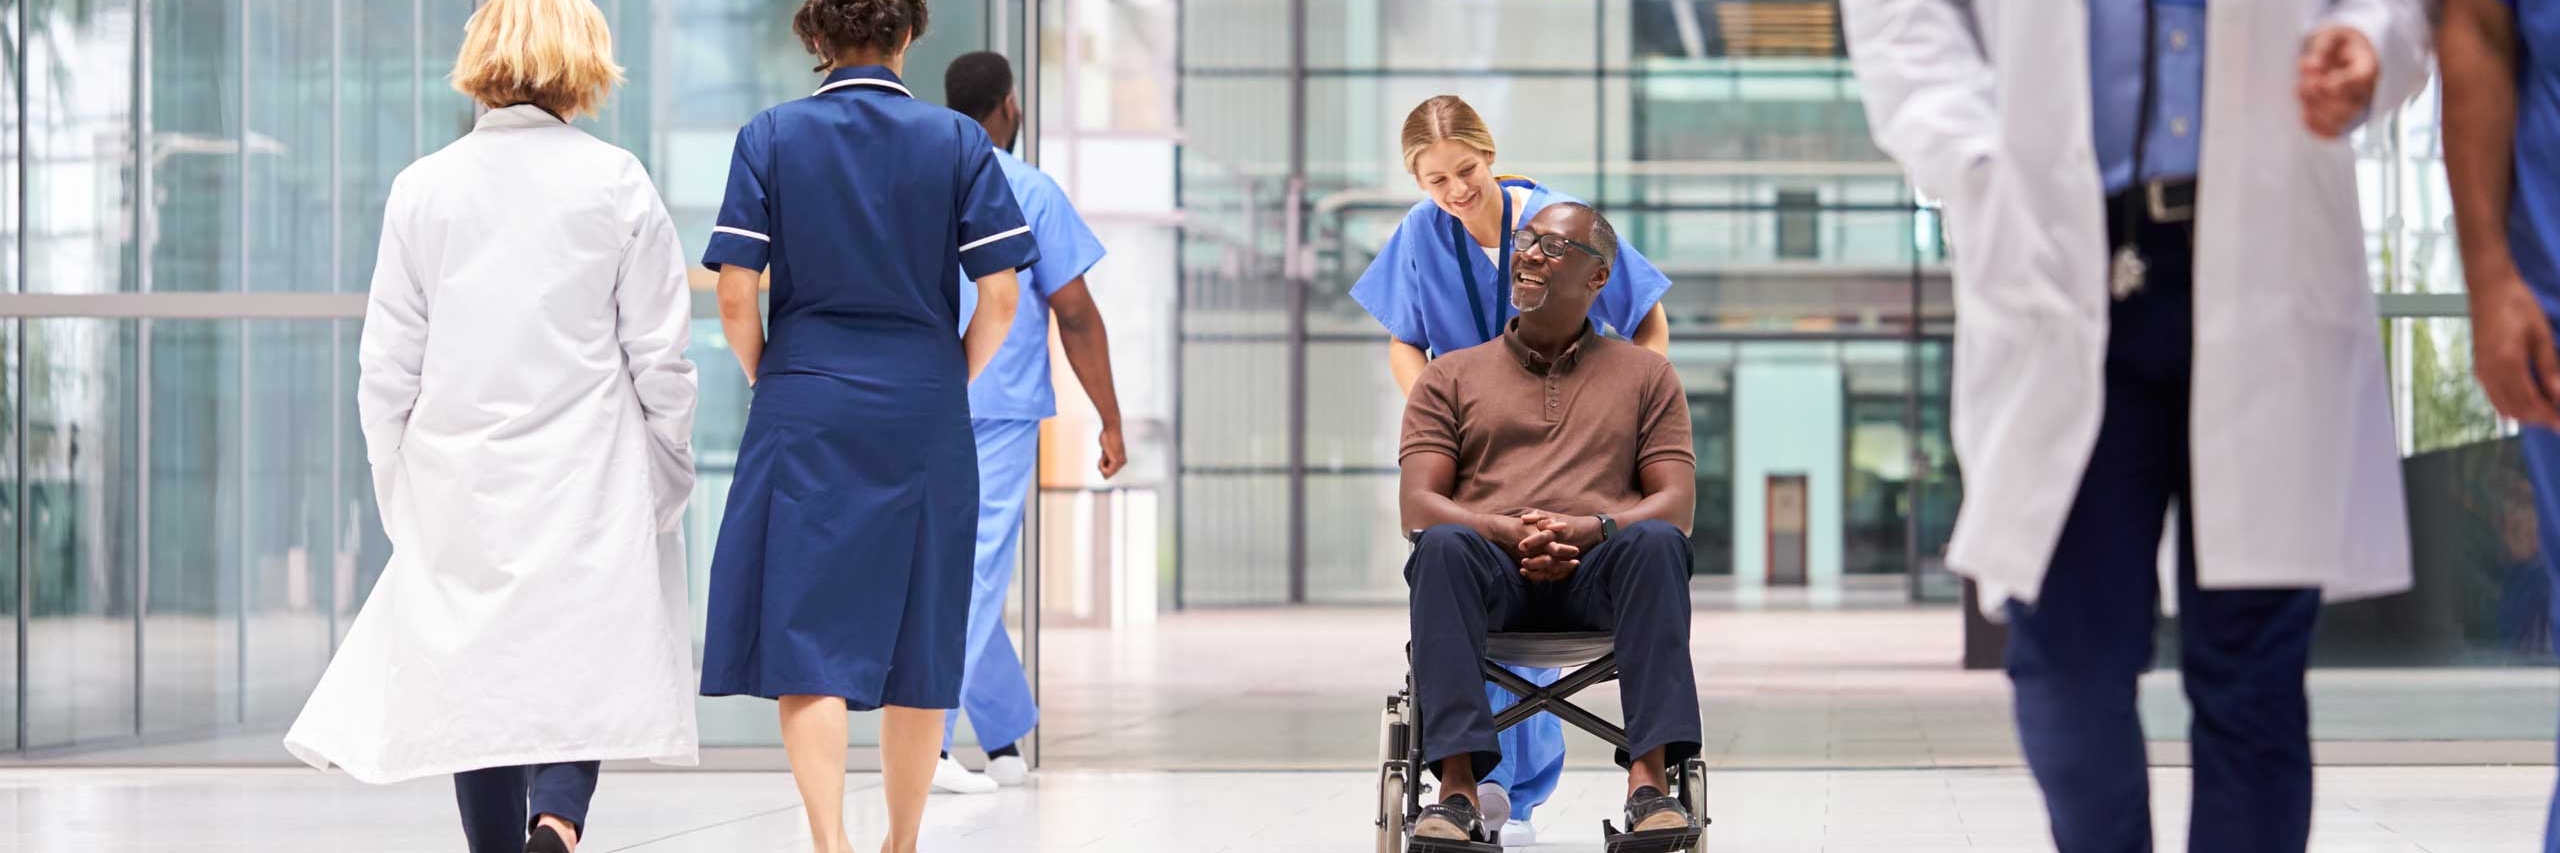 Female nurse wearing scrubs wheeling patient in wheelchair through lobby of modern hospital building